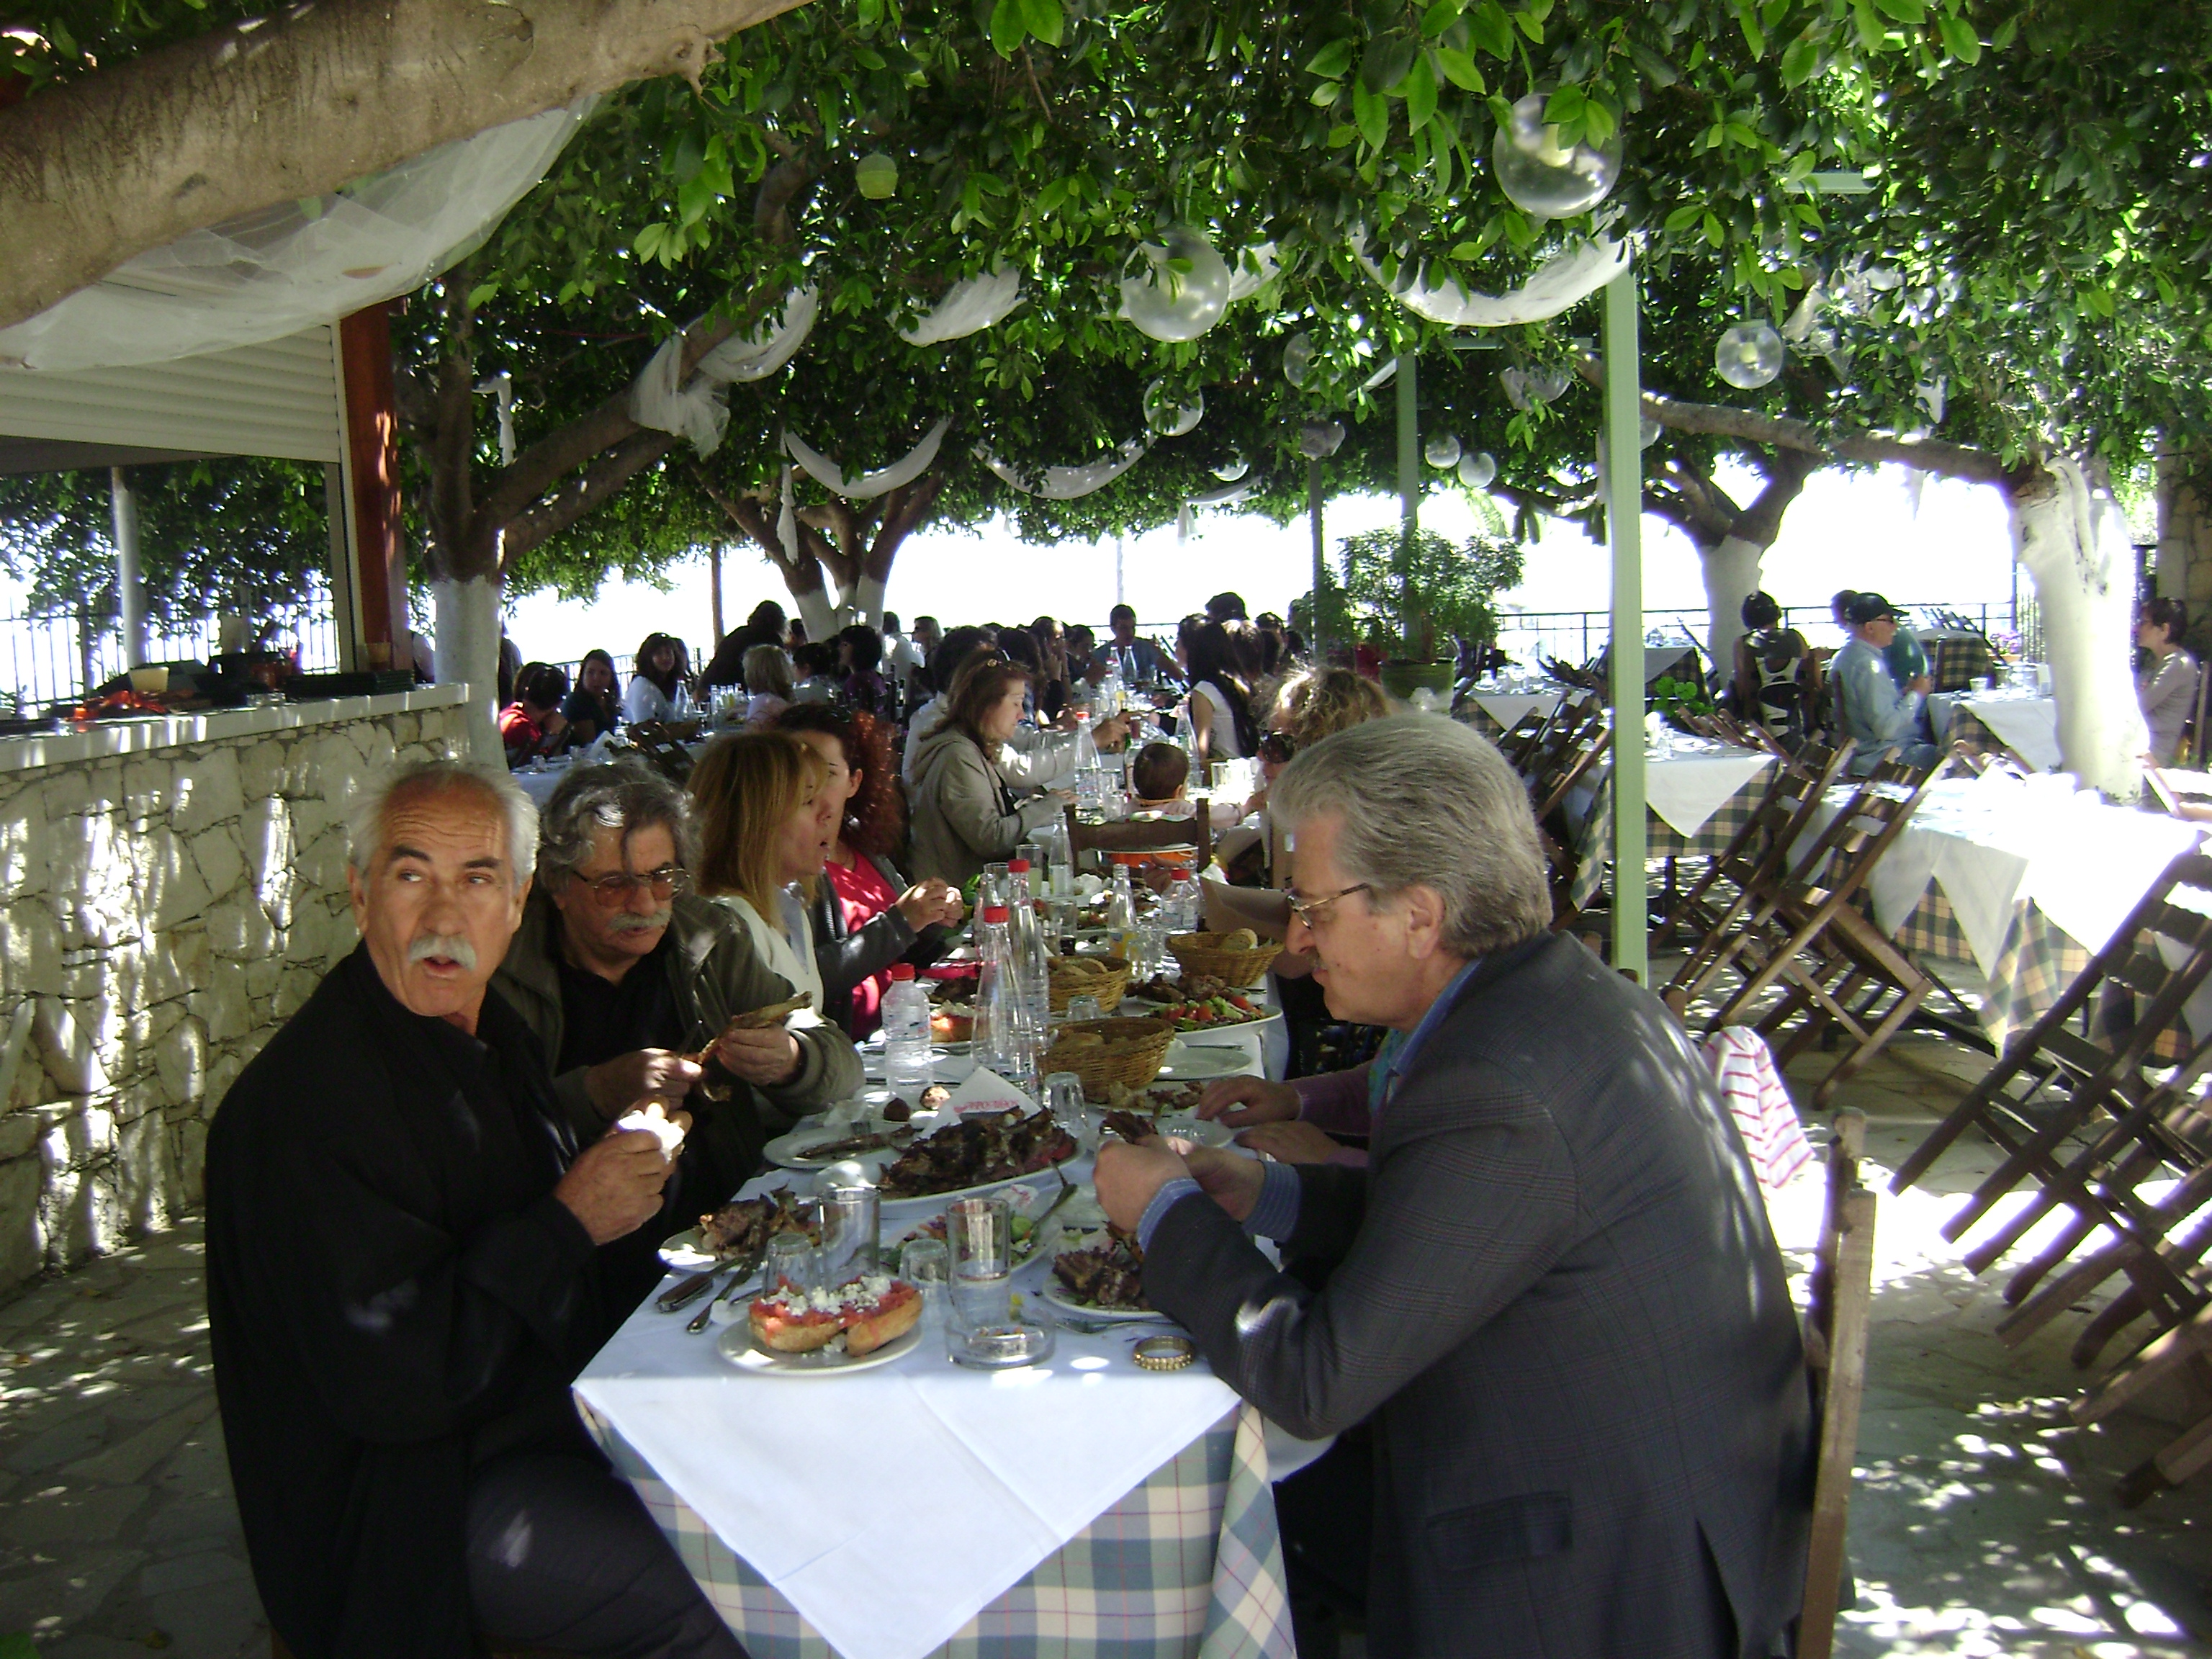 greek taverna, to eat and drink, greek food, cretan cuisine, cretan food and drink